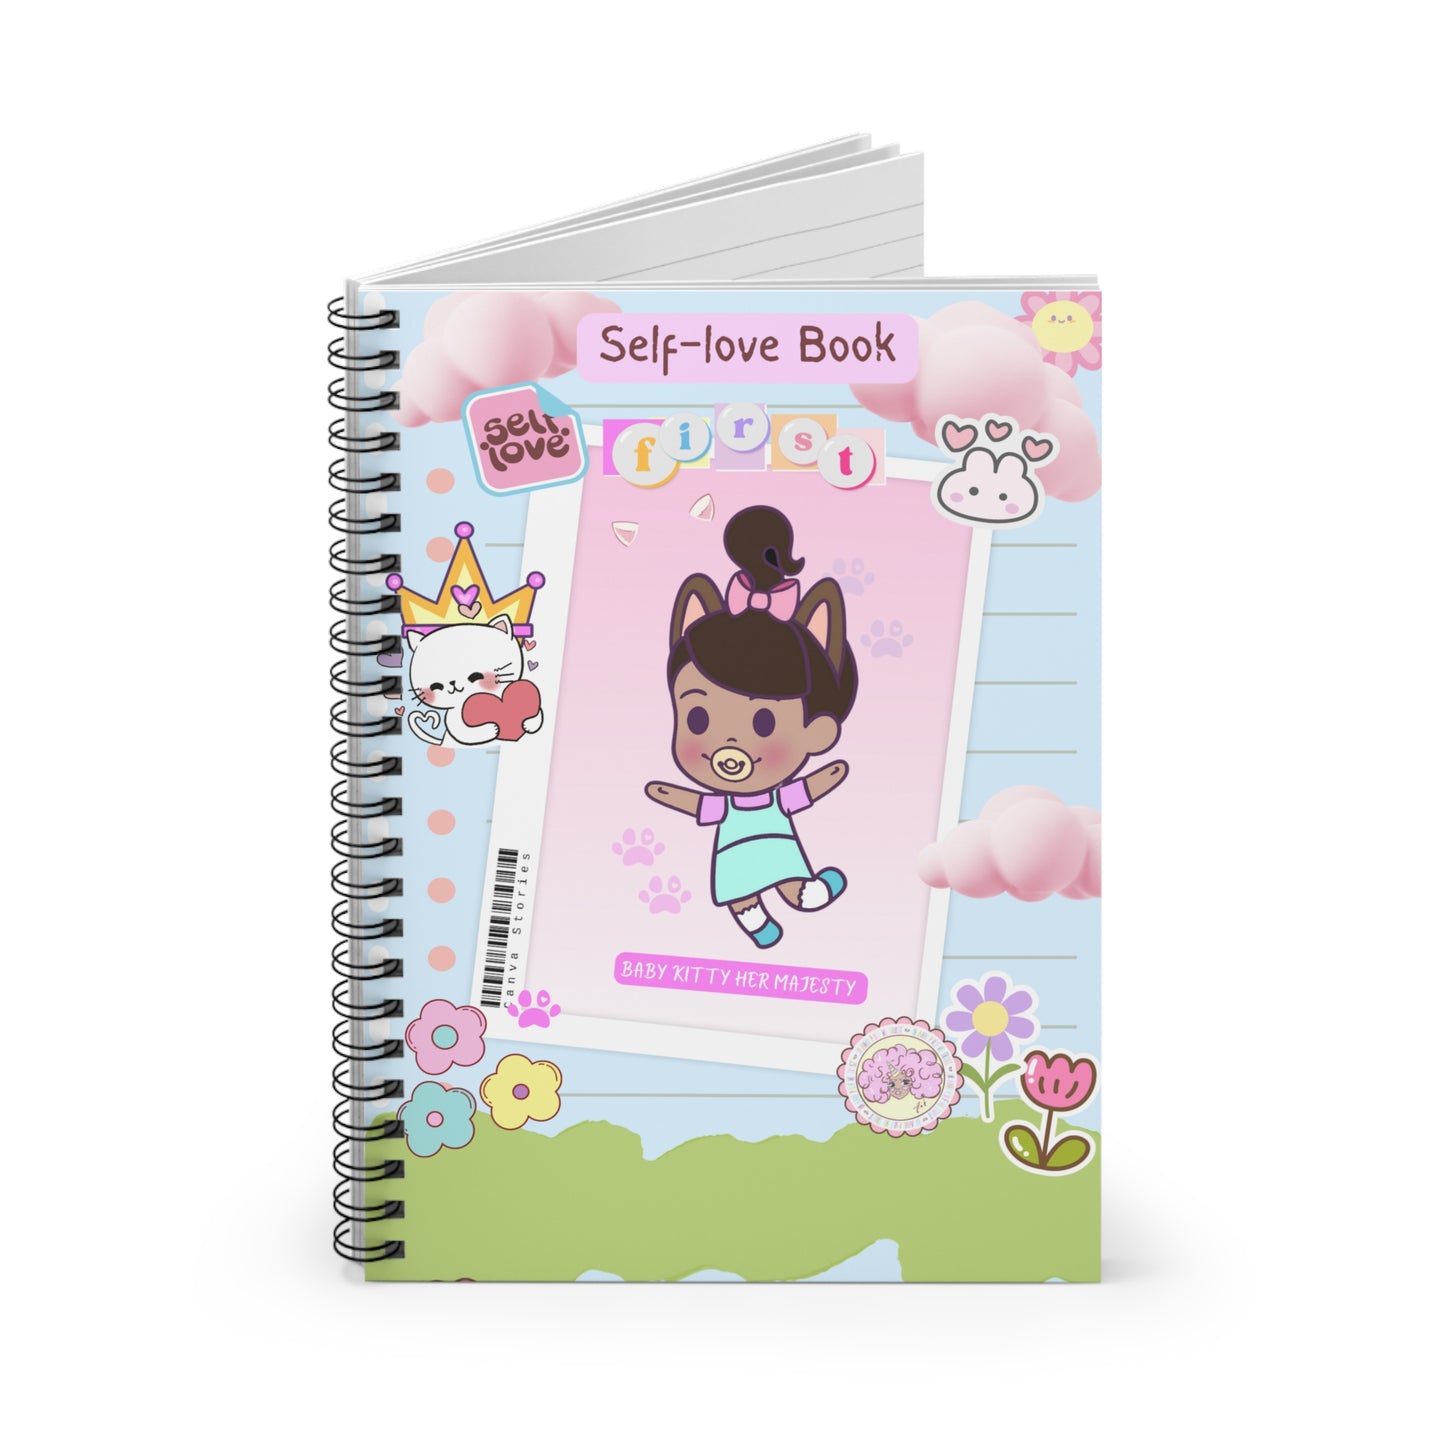 Babies first selflove  Notebook - Ruled Line (mindset)